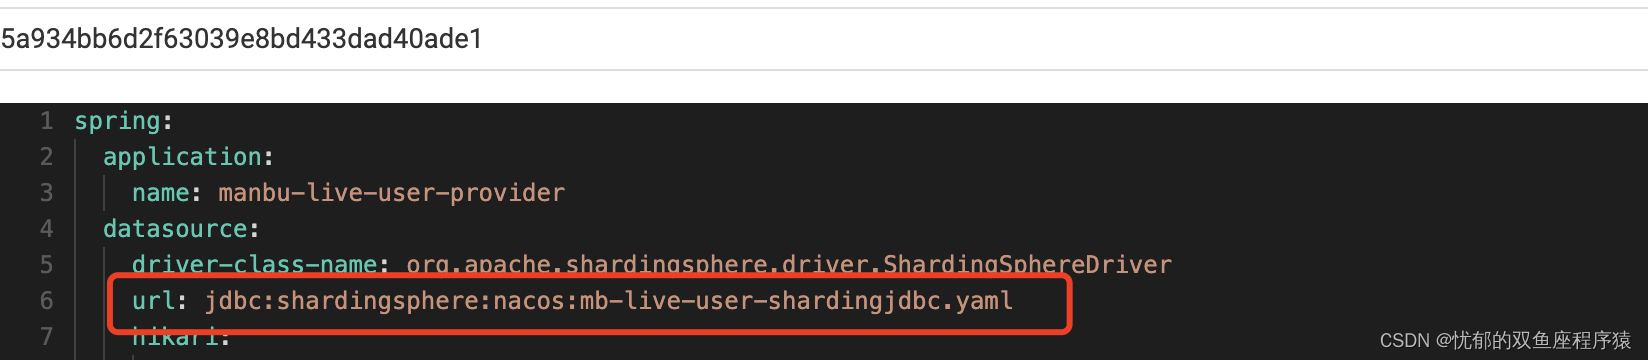 shardinig-JDBC二开-支持sharding-jdbc的配置文件接入到nacos